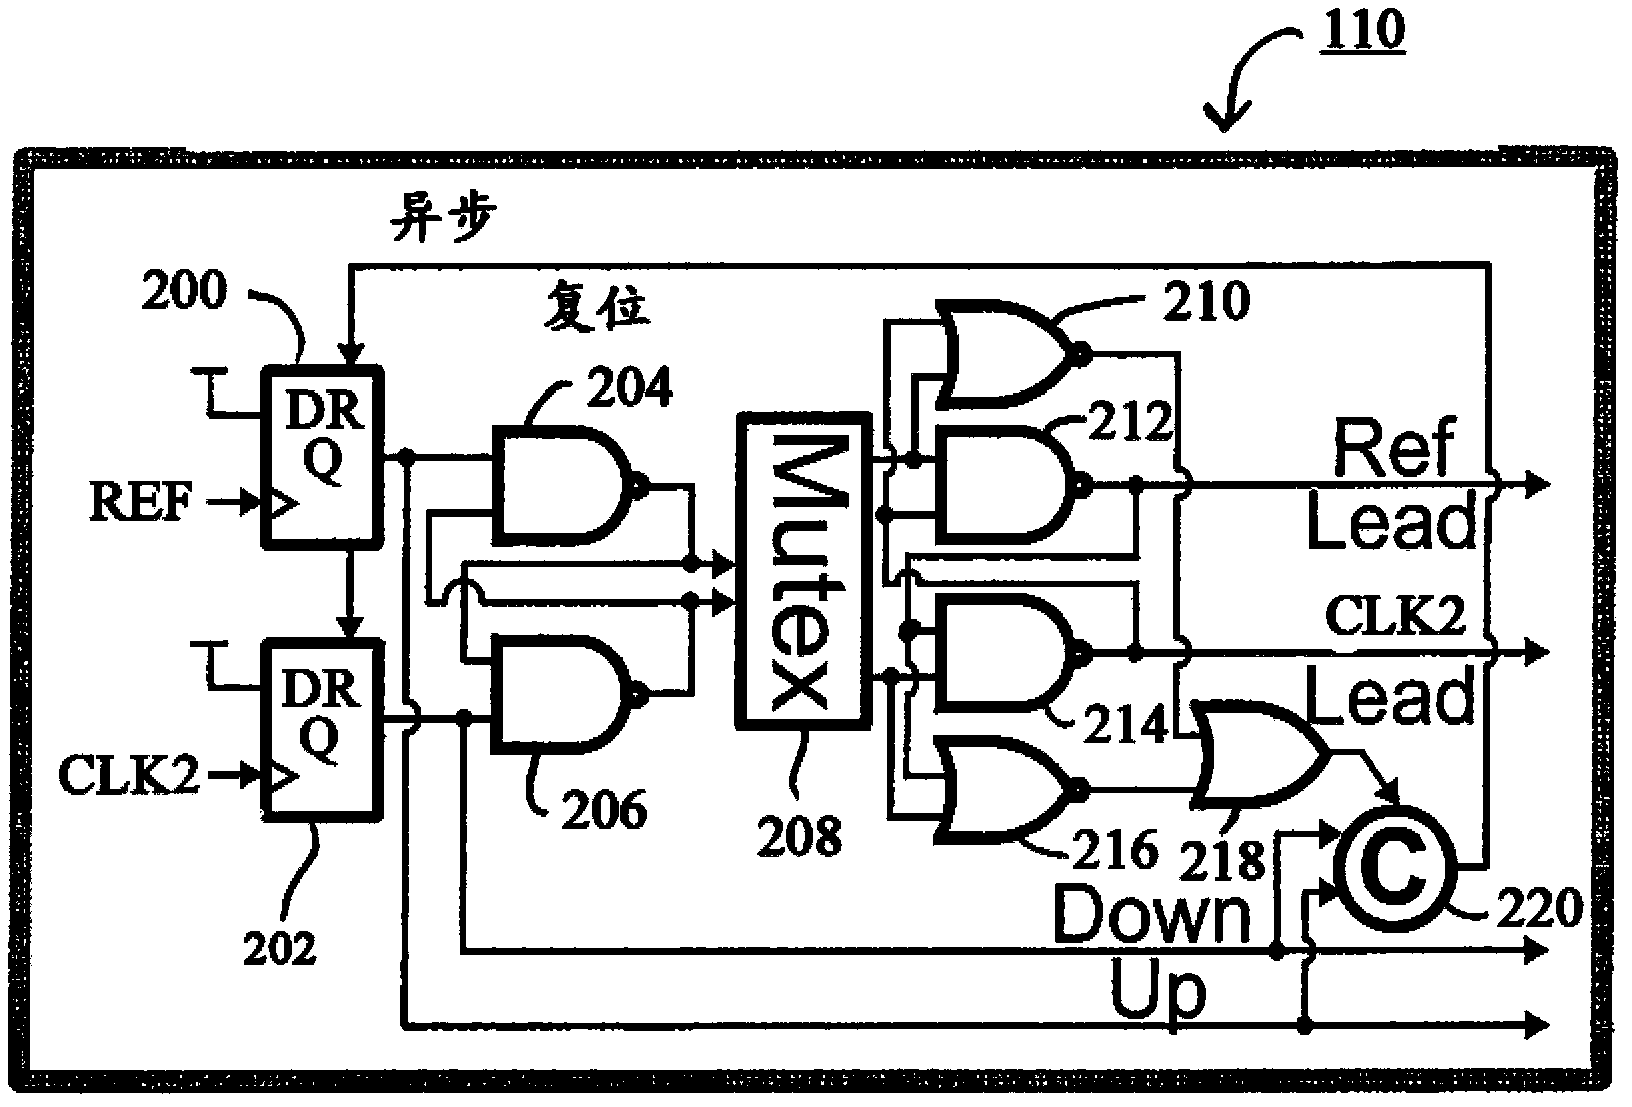 Phase locked loop circuit and method of generating clock signals using the phase locked loop